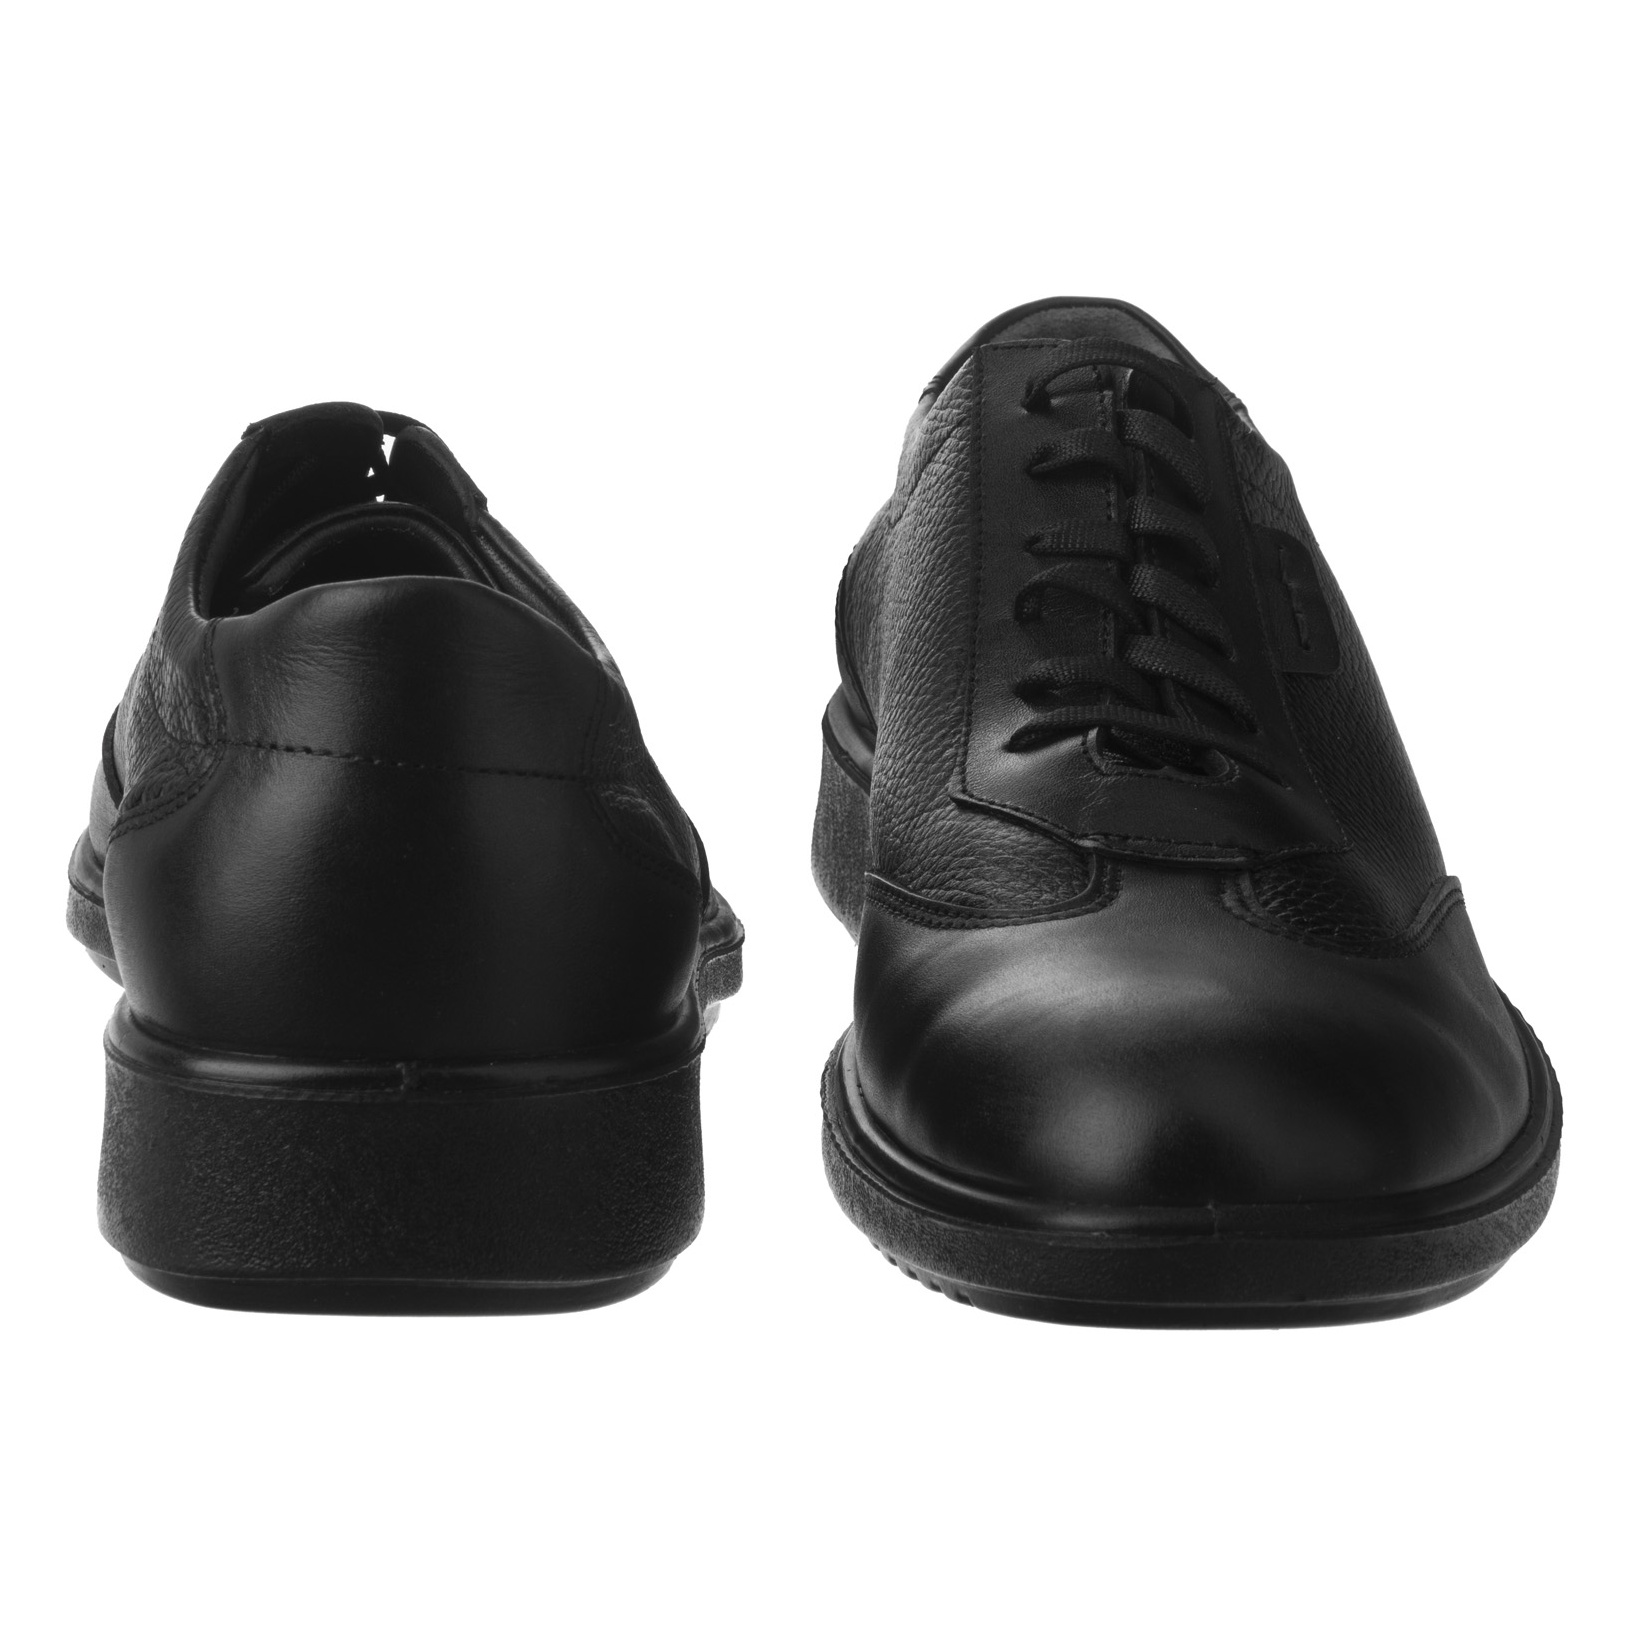 کفش روزمره مردانه شیفر مدل 7216D-101 - مشکی - 7